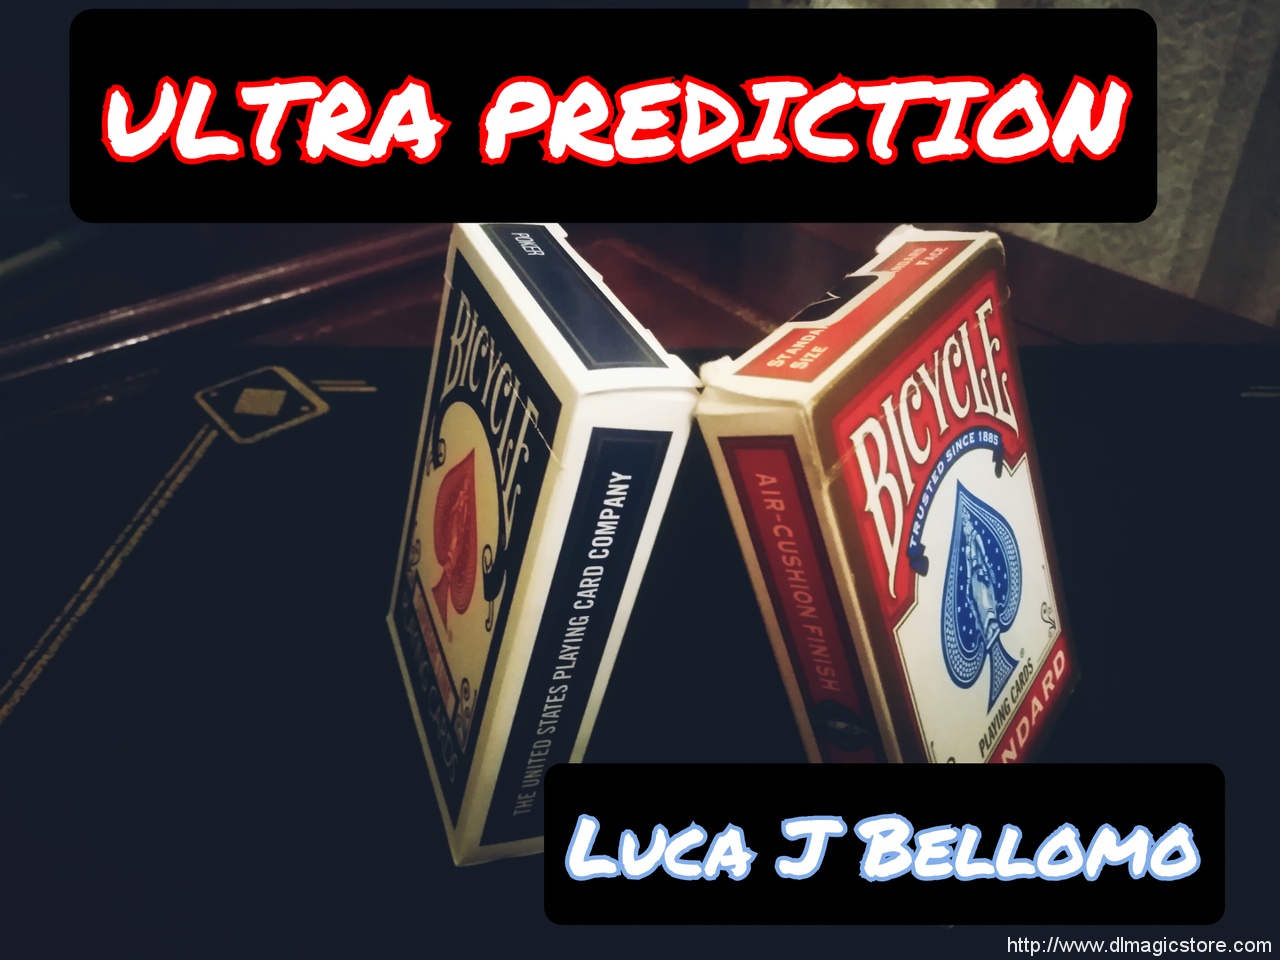 ULTRA PREDICTION by Luca J. Bellomo (LJB) (Instant Download)